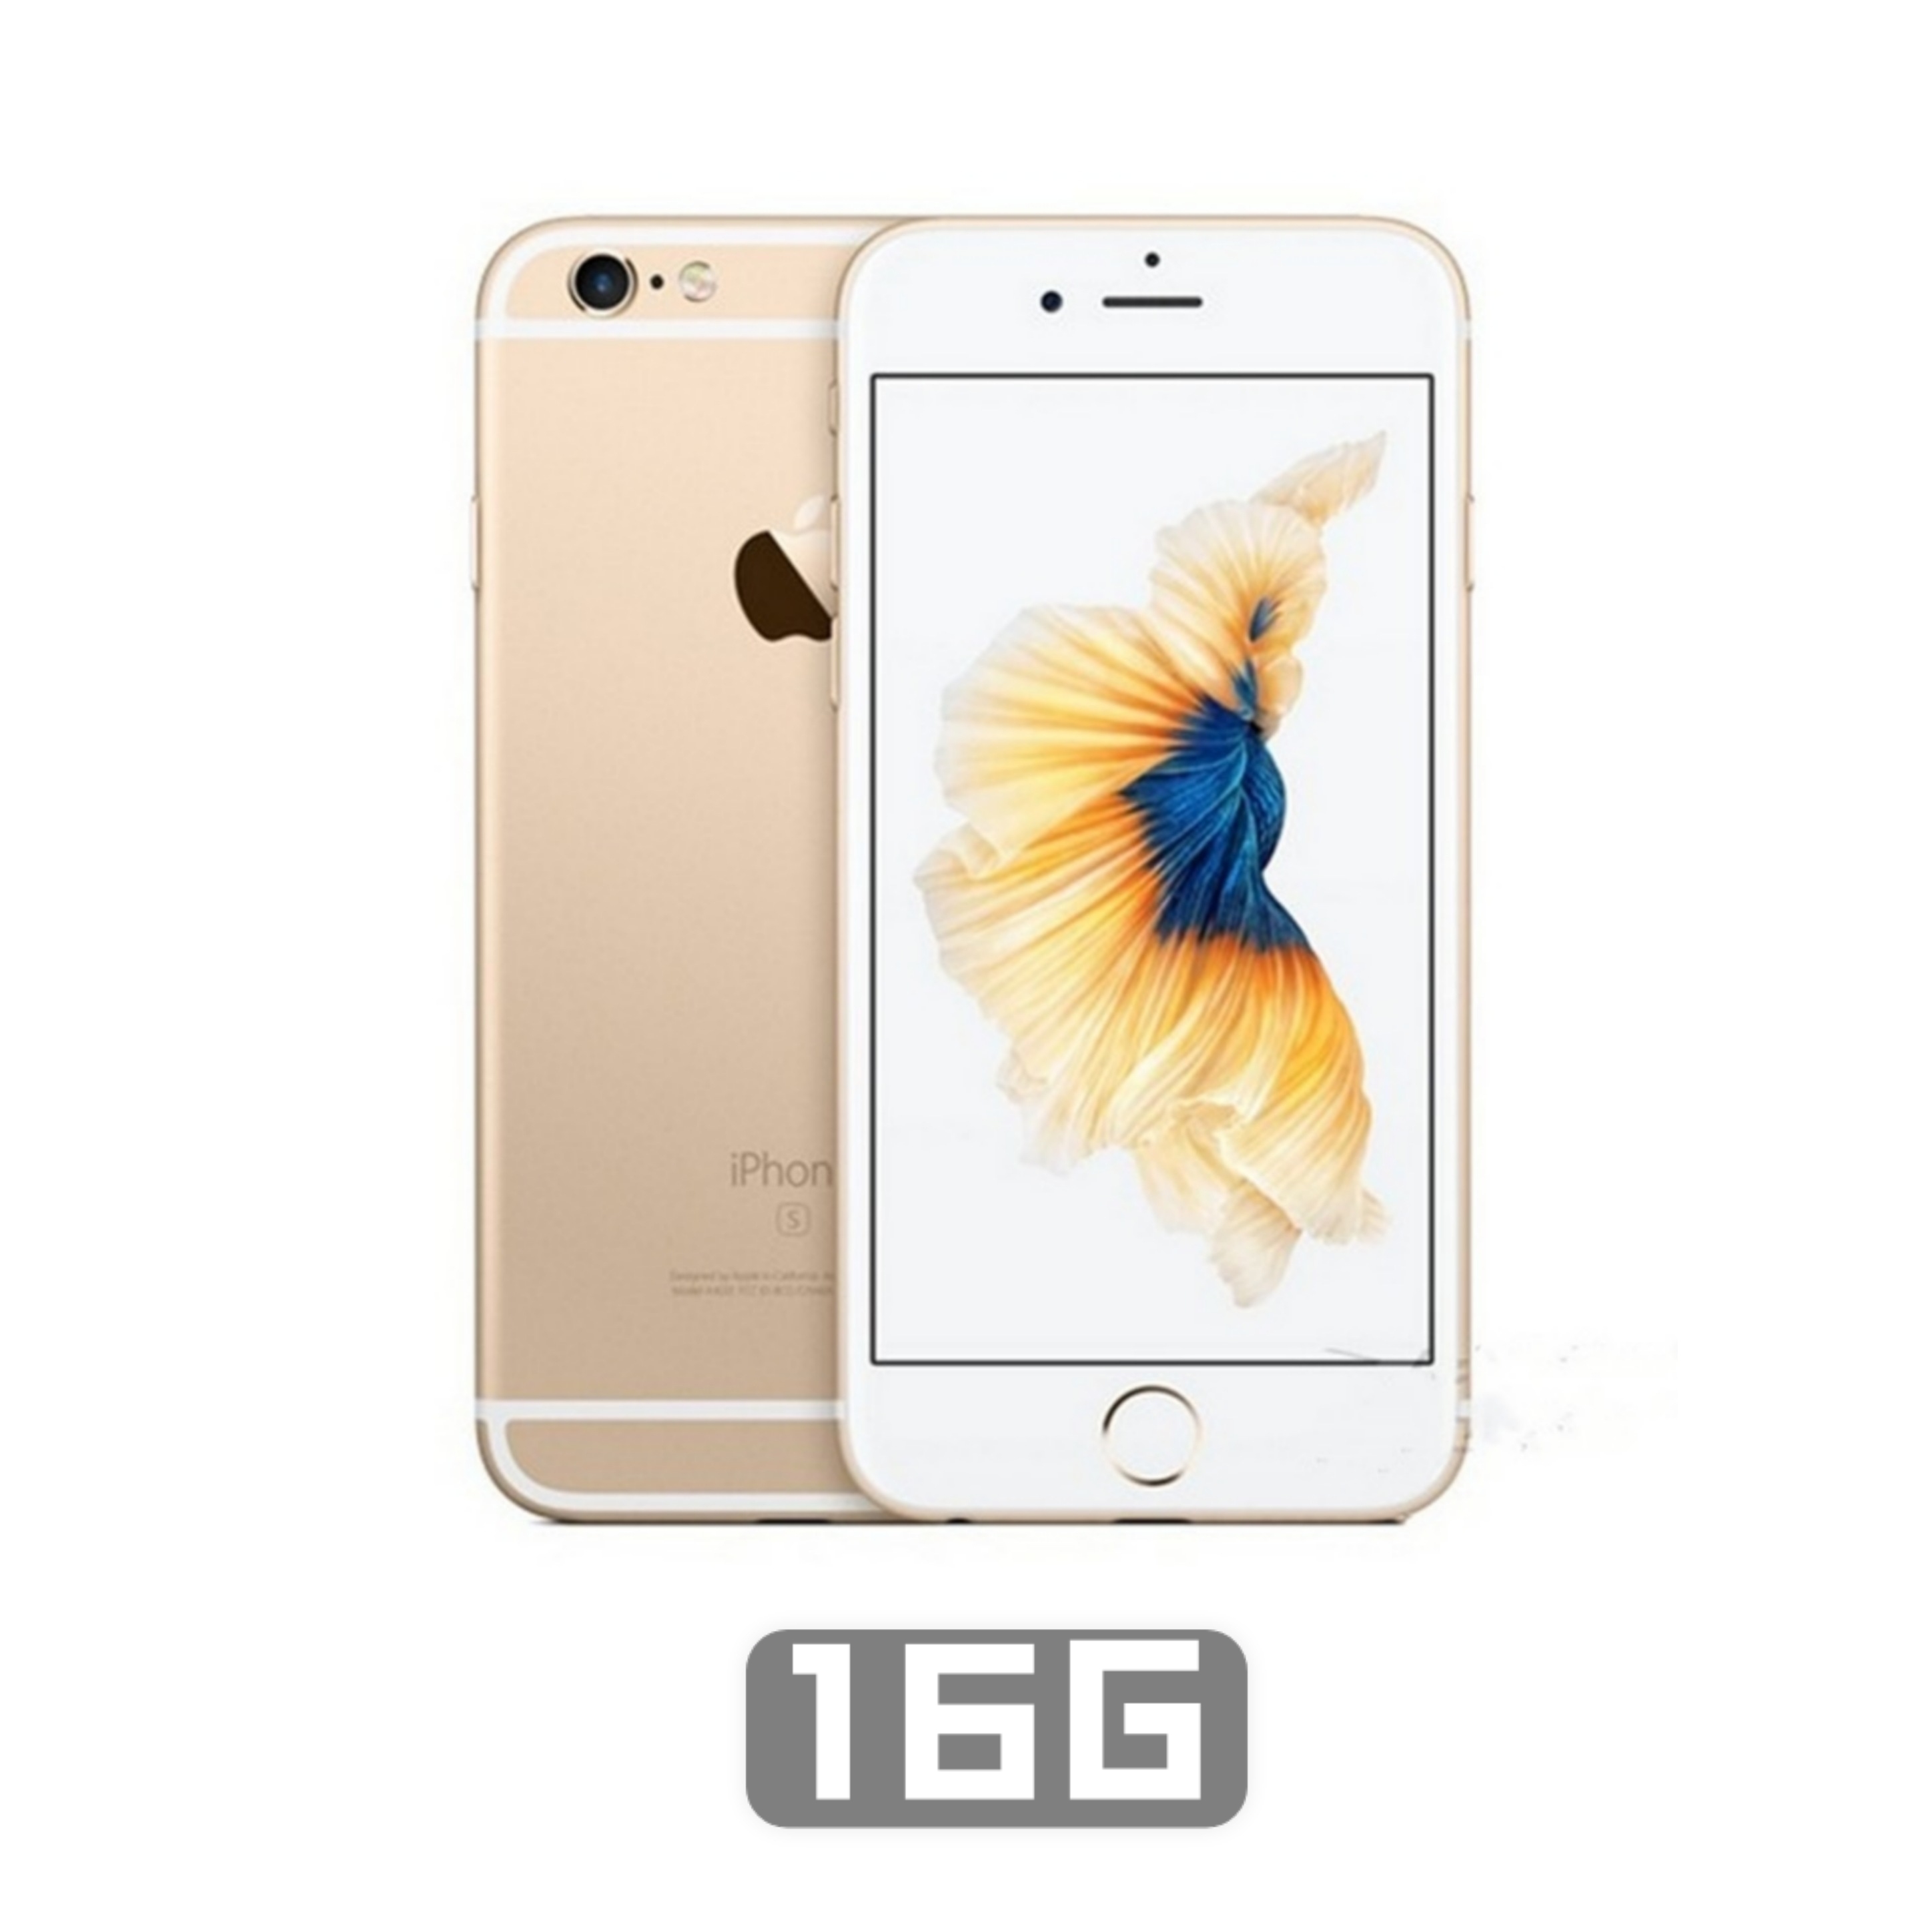 Apple iPhone 6s Plus มือ2 [16GB][32GB][64GB][128GB] เครื่องแท้  ใหม่แกะกล่อง ไอโฟน 6sp รับประกันจากทางร้าน iphone 6sp ขนาดหน้าจอใหญ่  โทรศัพท์มือถือ ราคาถูกๆ